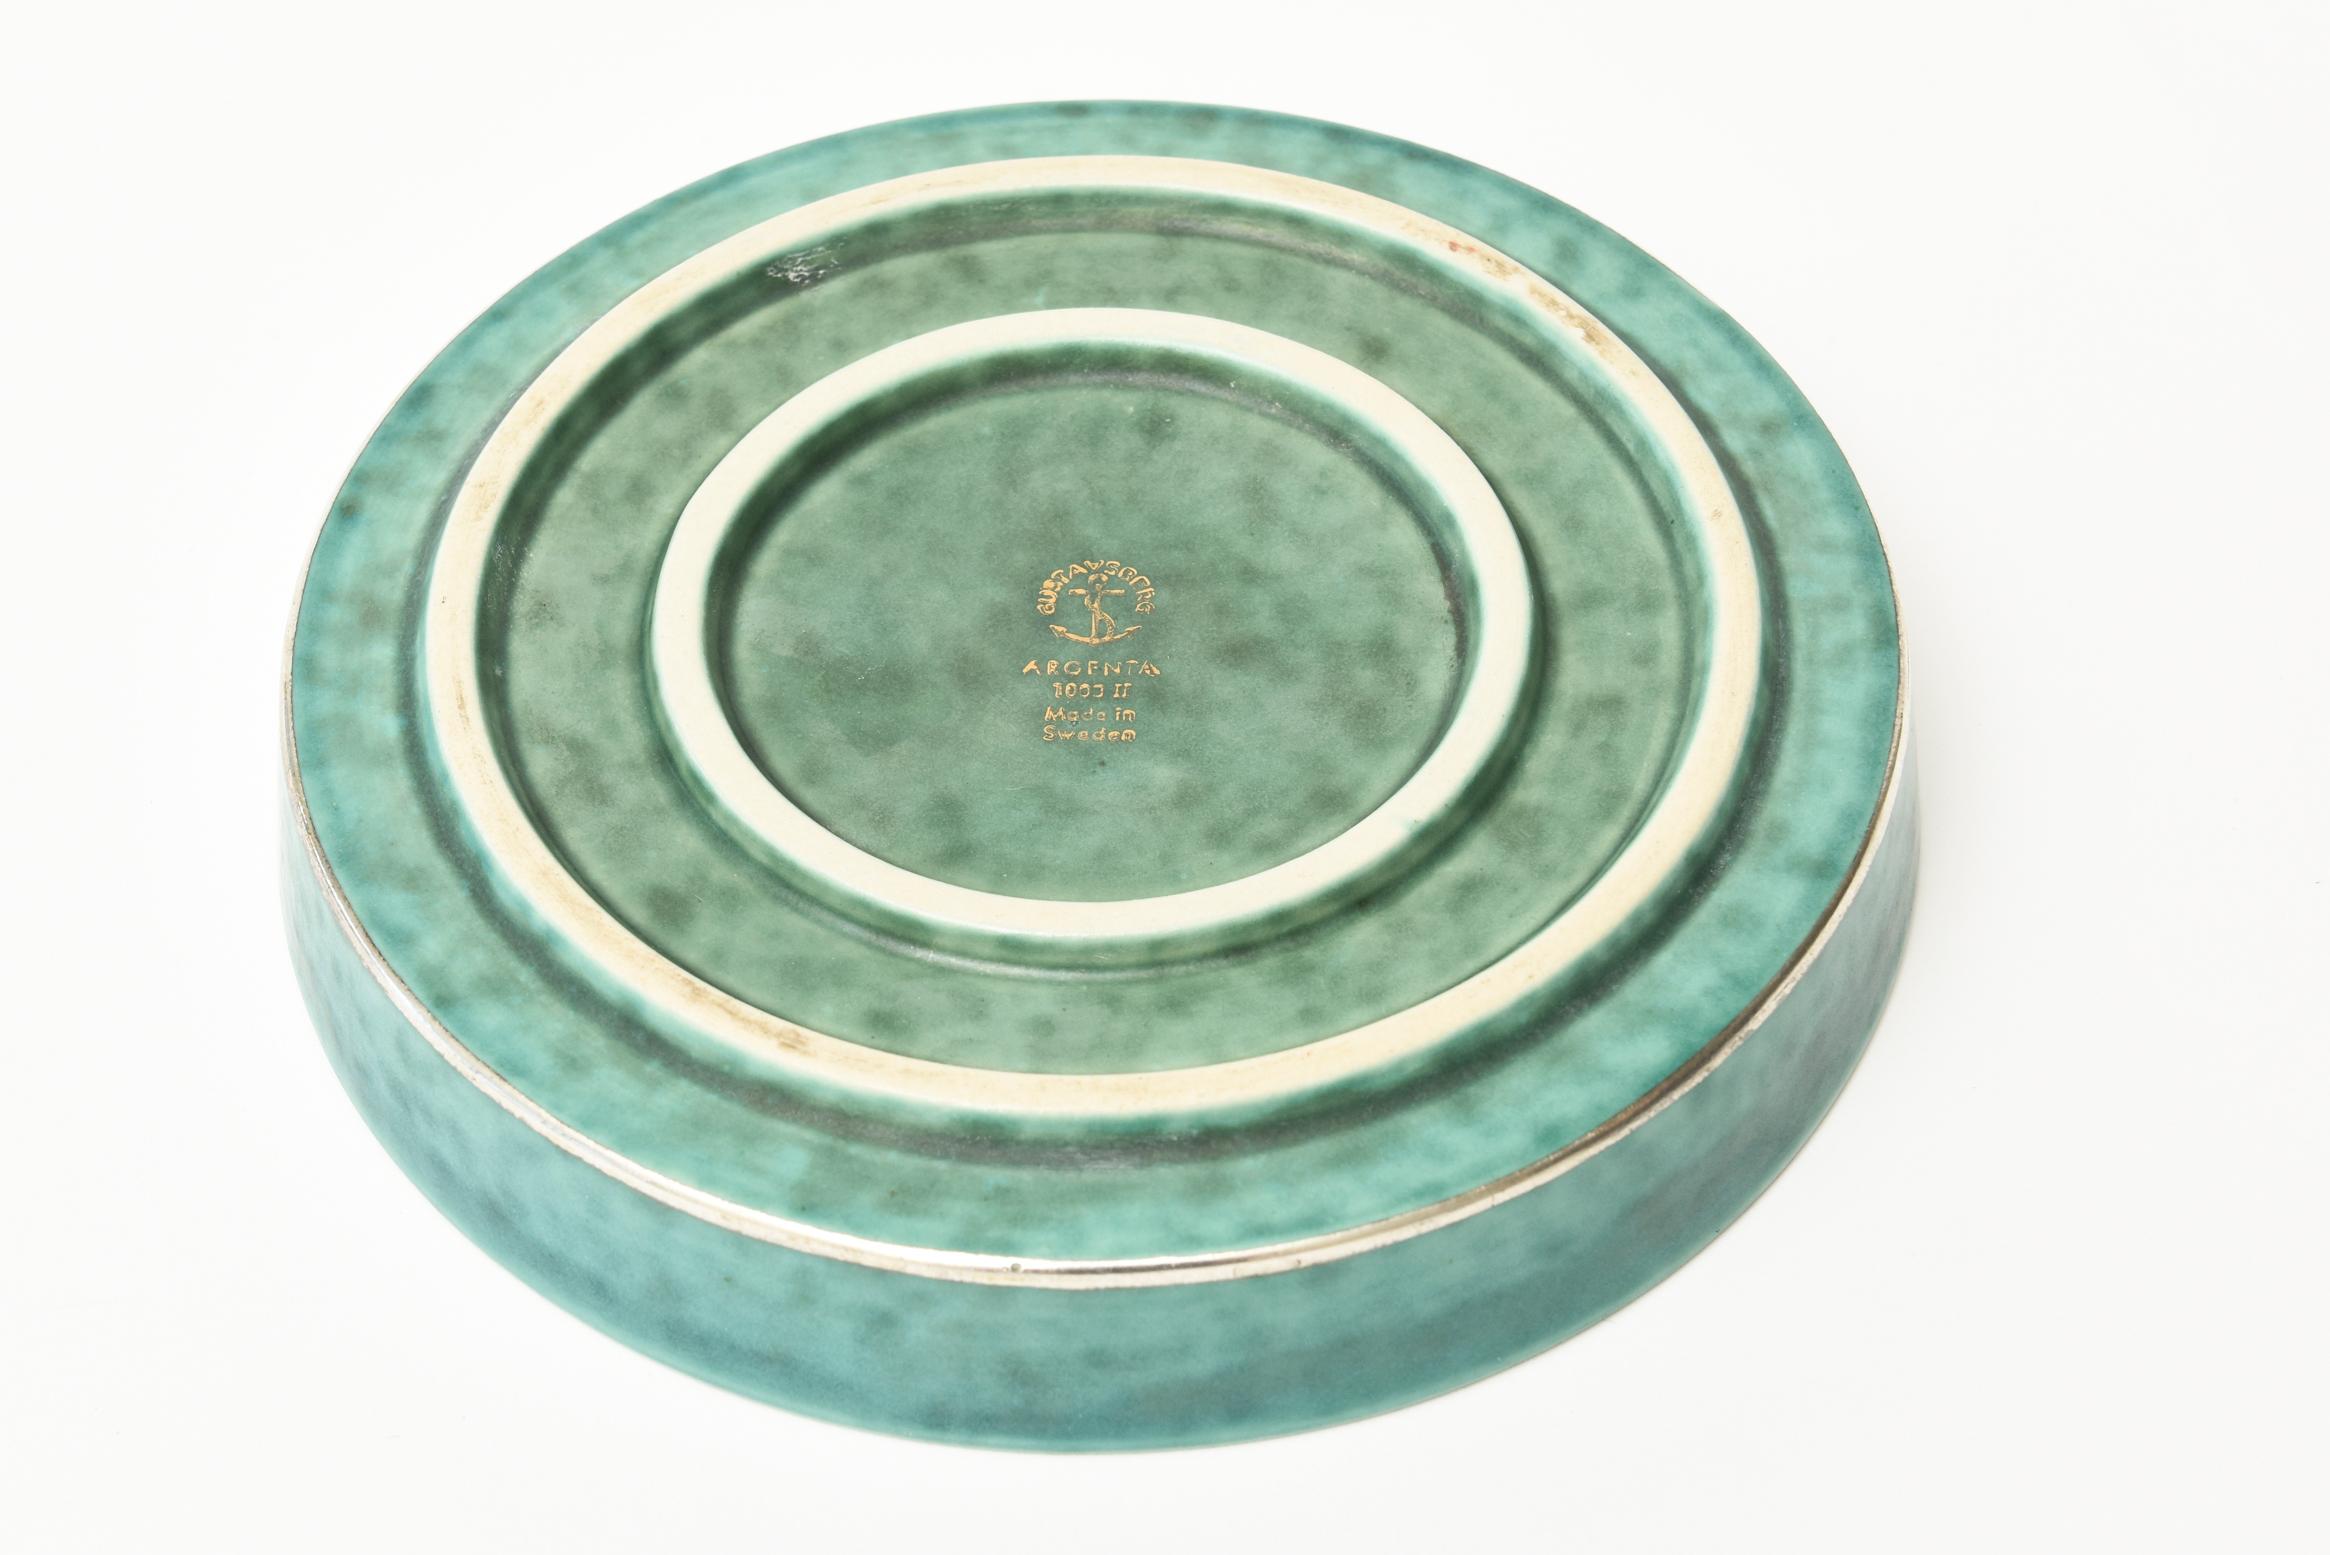 Swedish Wilhelm Kage Gustavsberg Argenta Ceramic and Sterling Silver Bowl Dish Vintage